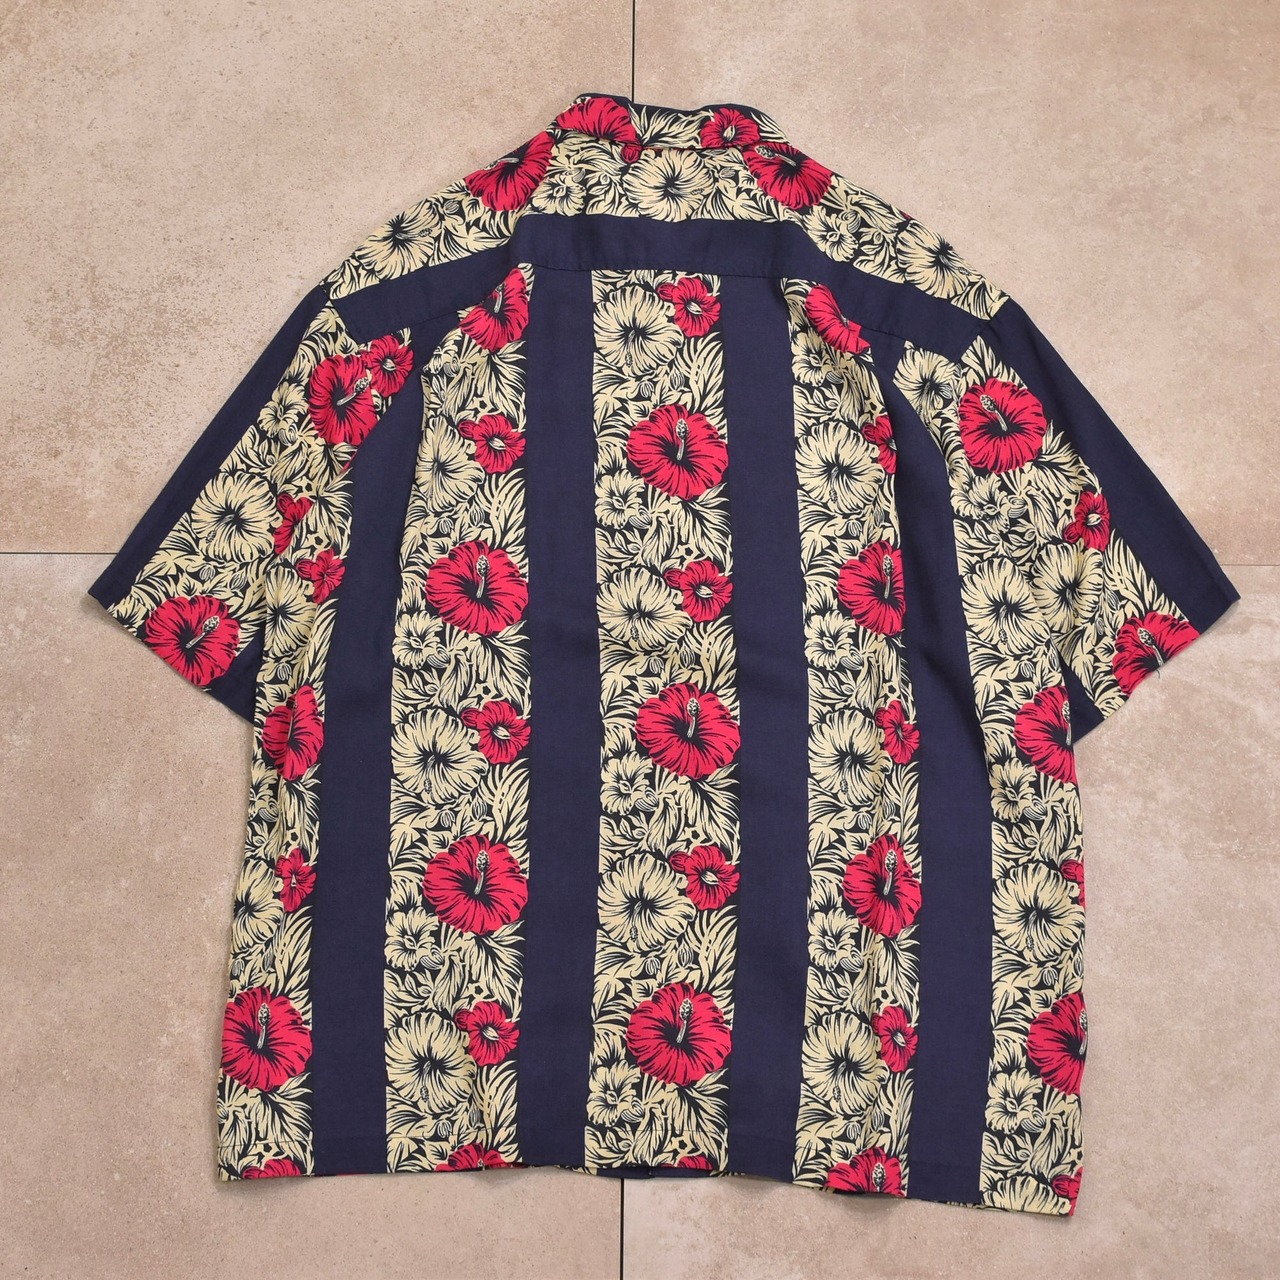 90s MAUI and Sons border pattern aloha shirt